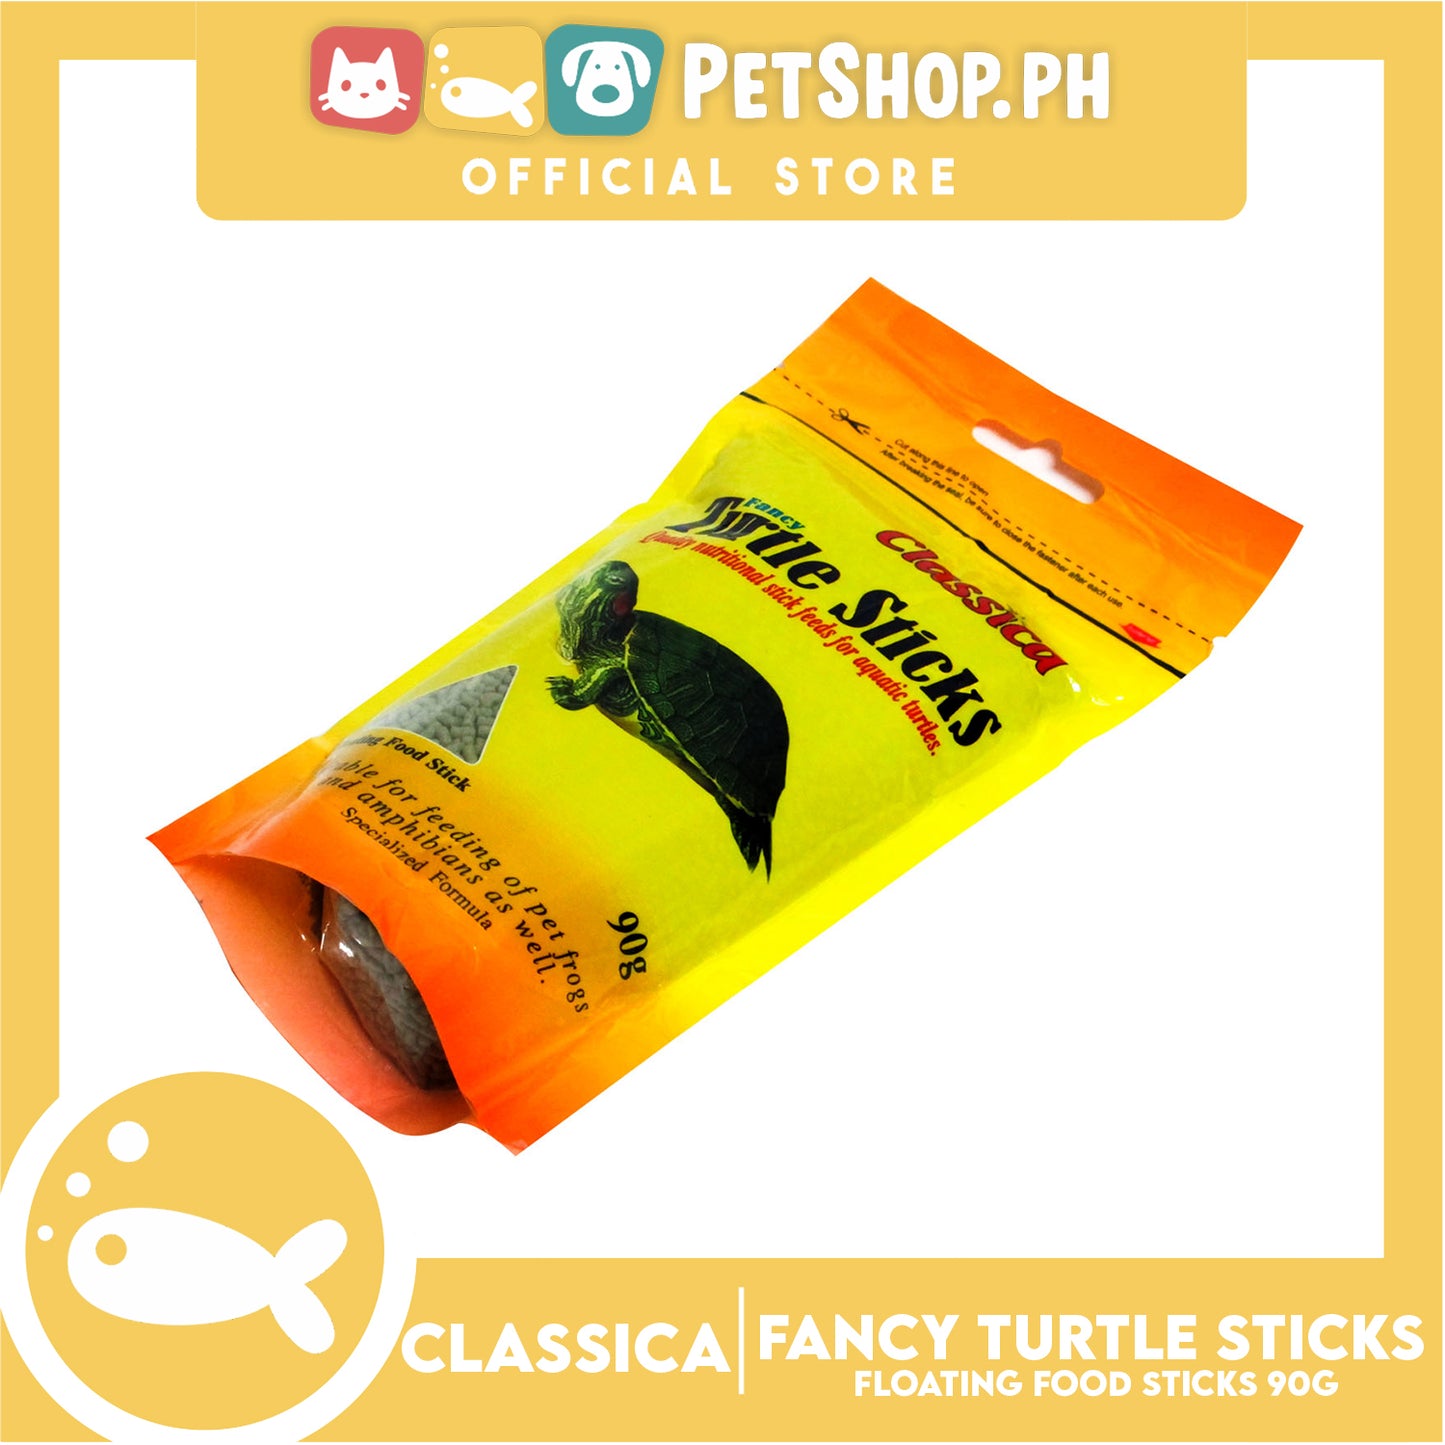 Classica Fancy Turtle Sticks 90g